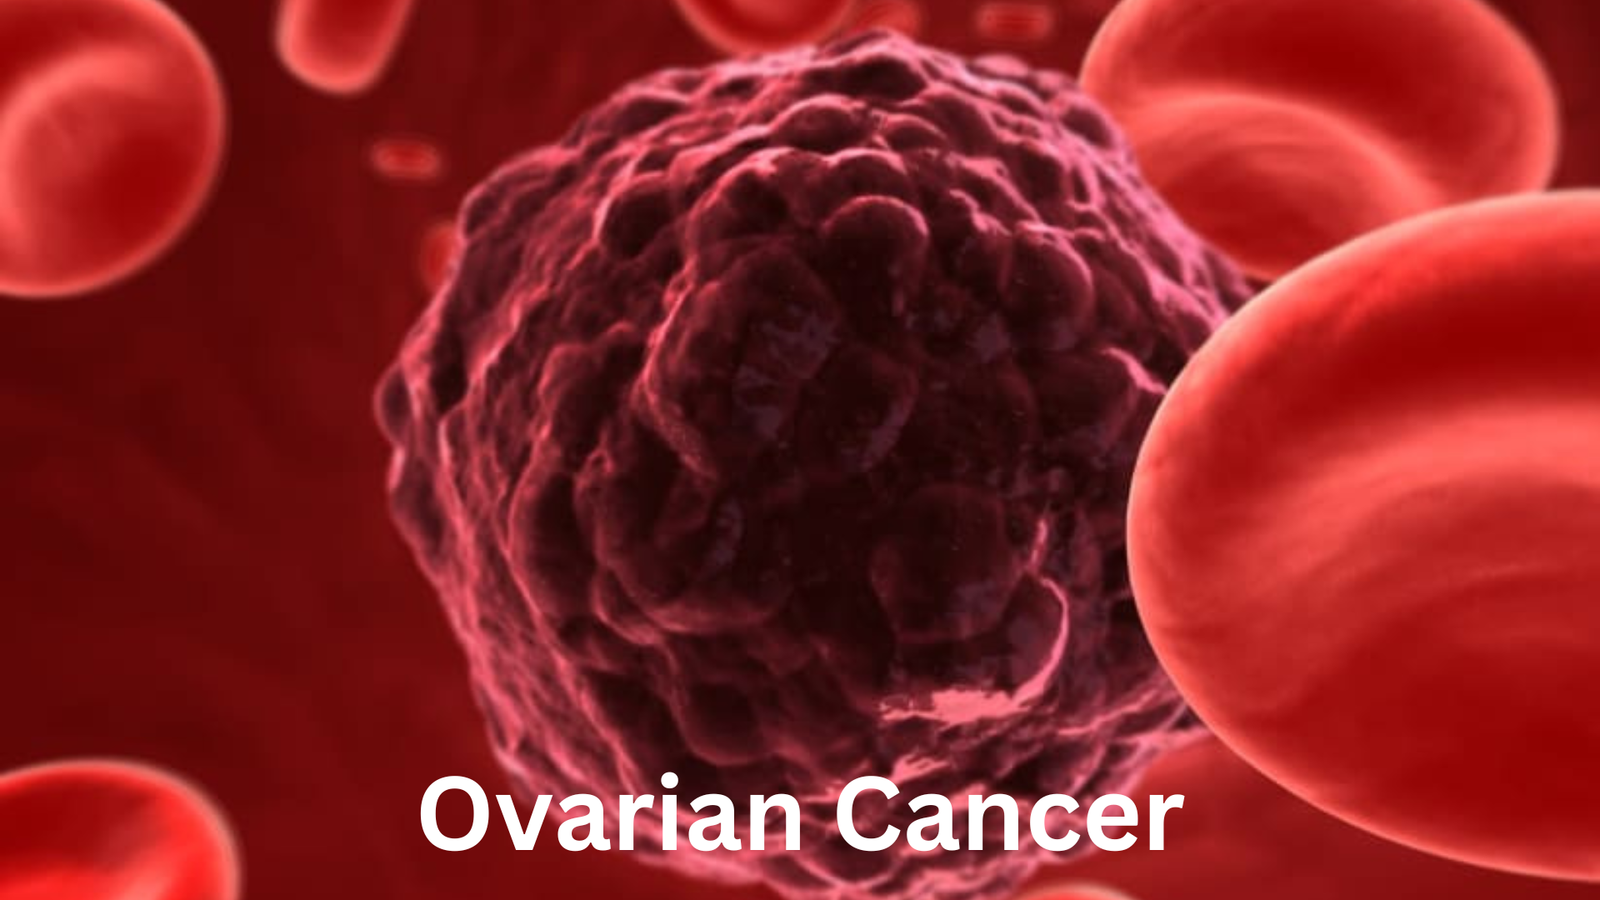 Ovarian cancer